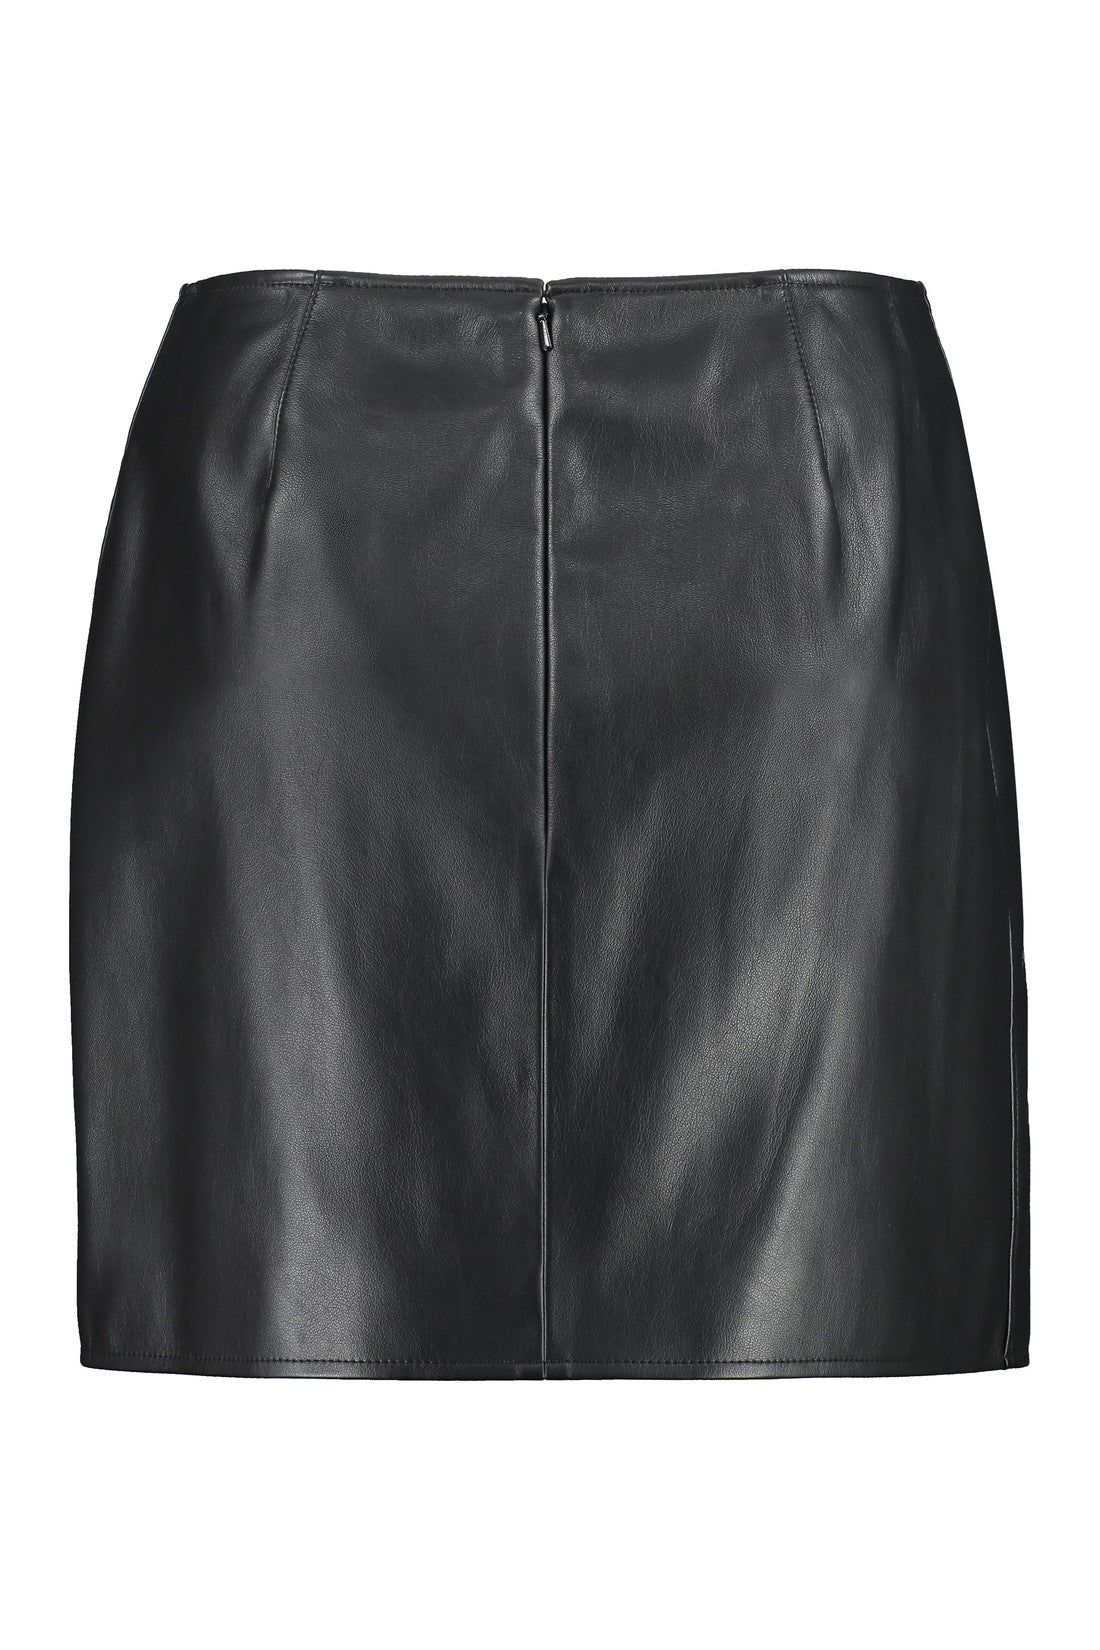 Stand Studio-OUTLET-SALE-Vegan leather mini skirt-ARCHIVIST